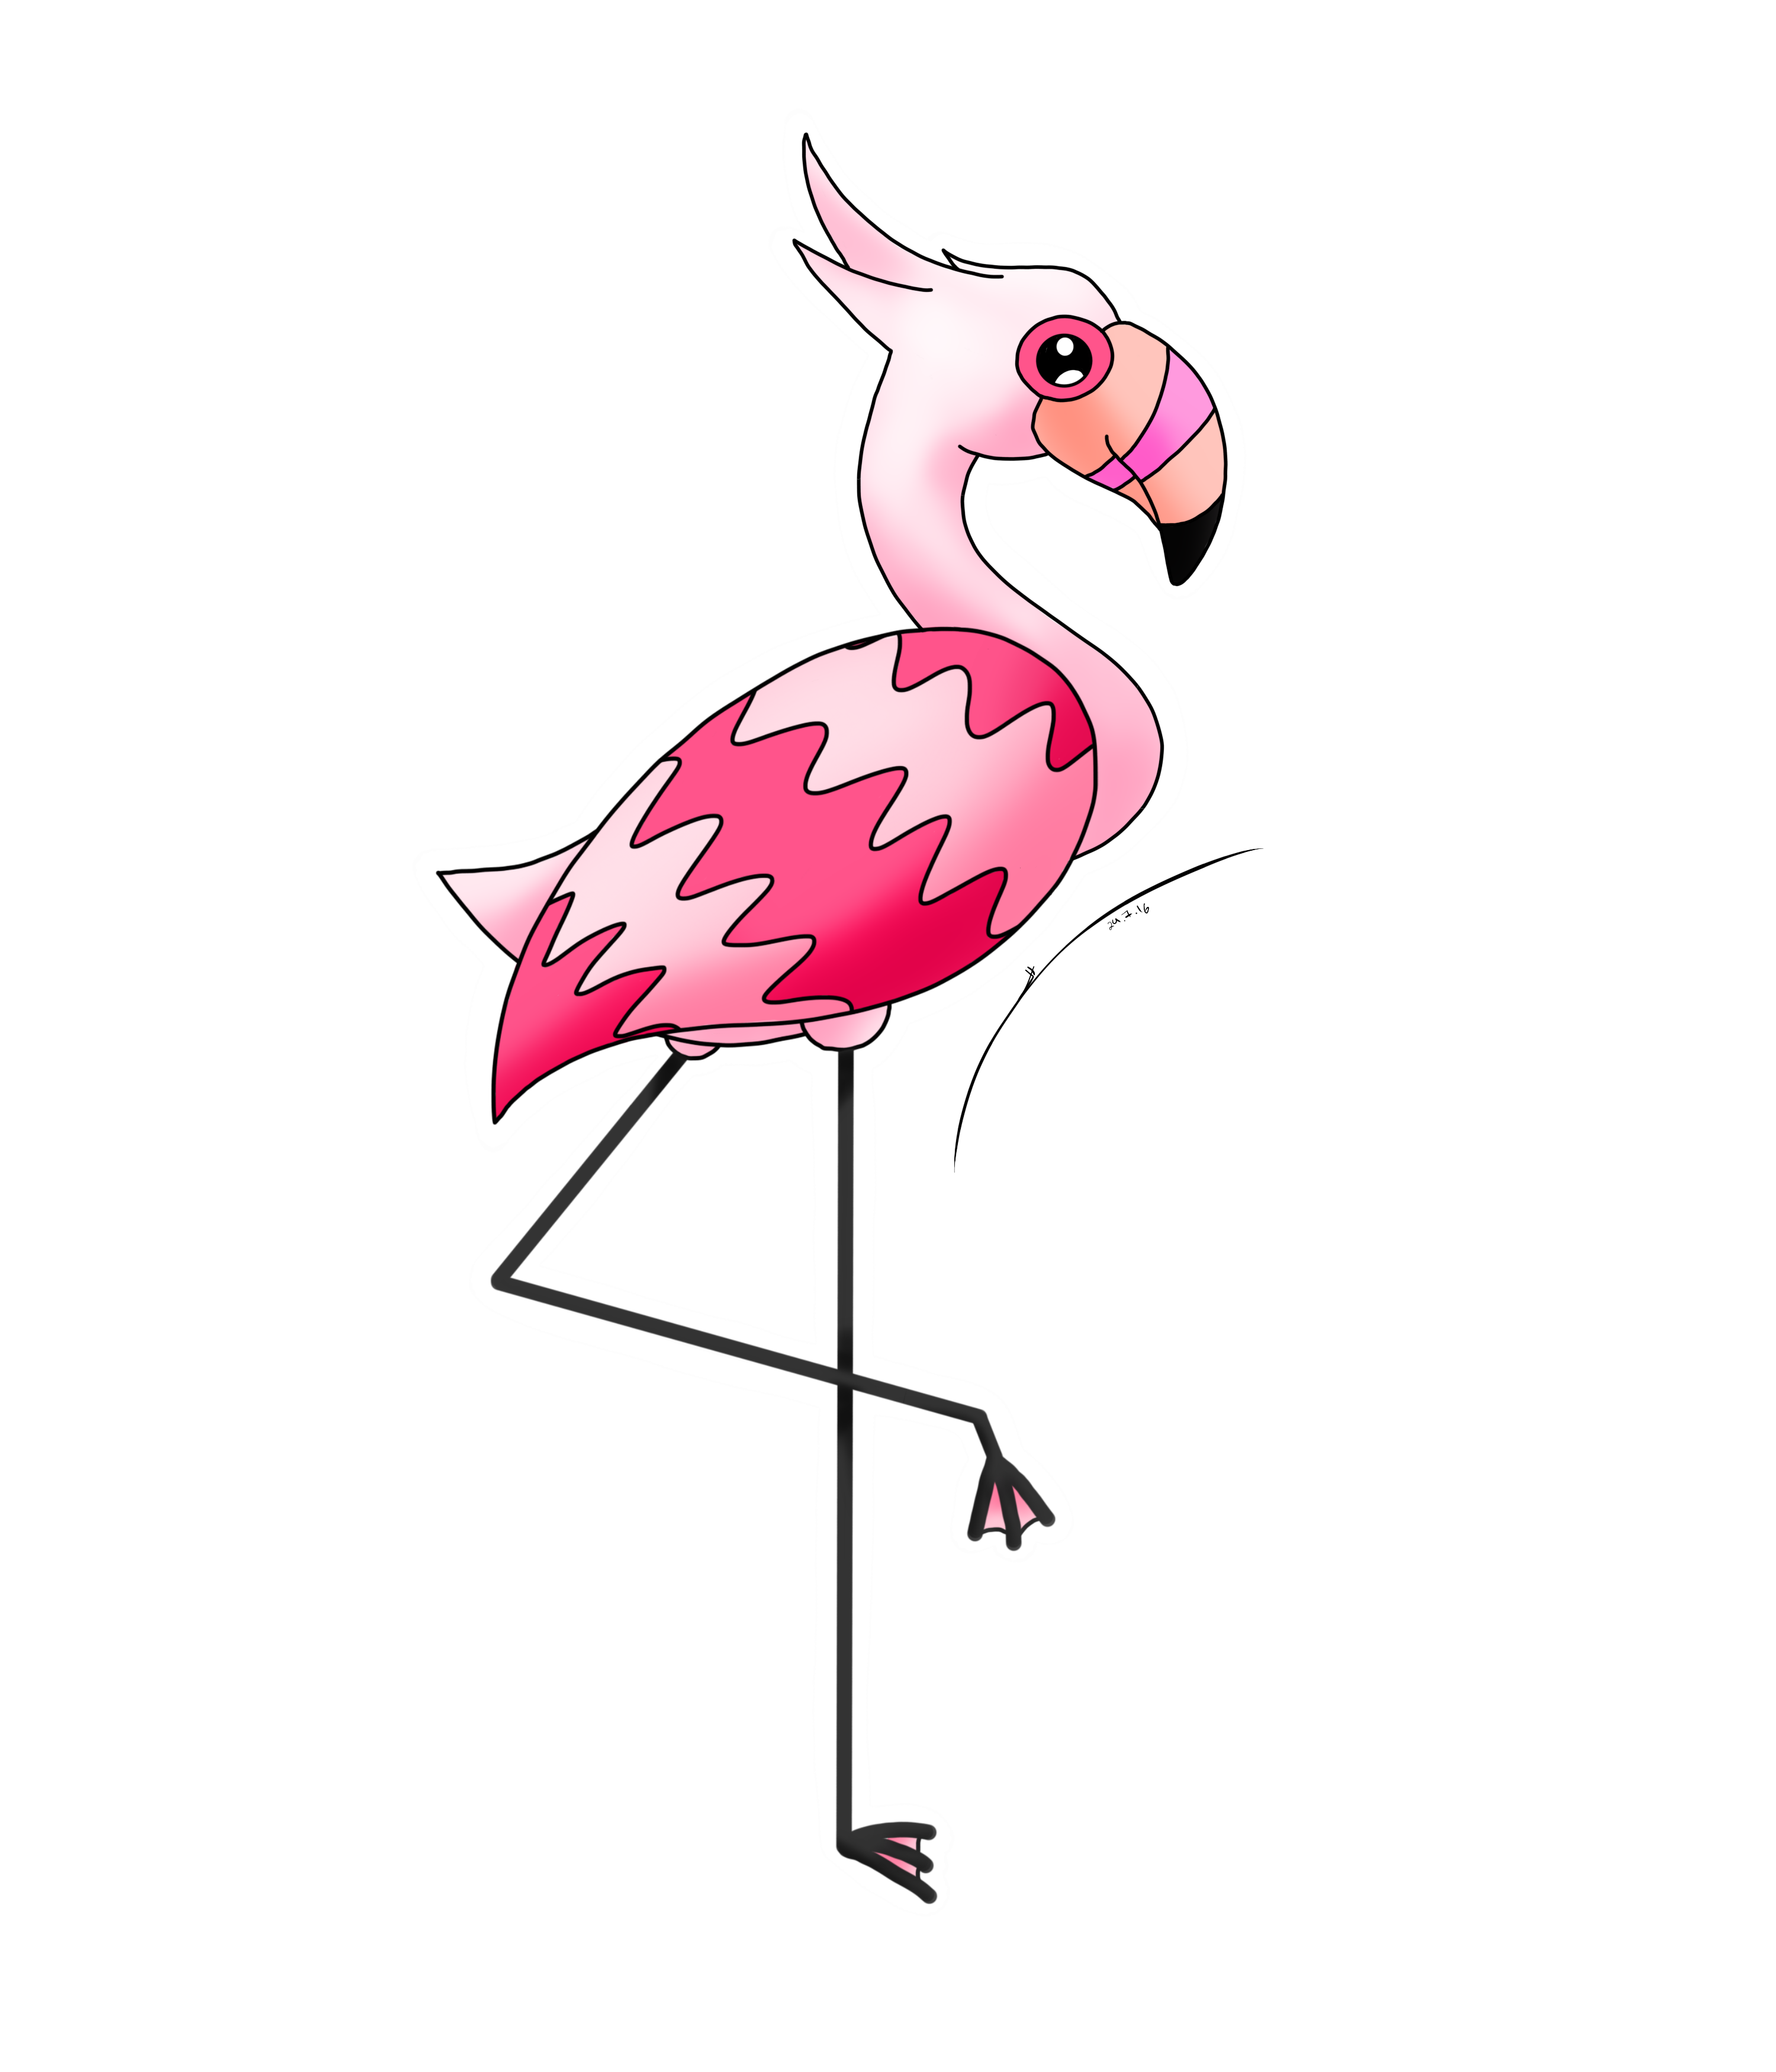 Feamingo, Flamingo Fakemon by DarkraiLady on DeviantArt